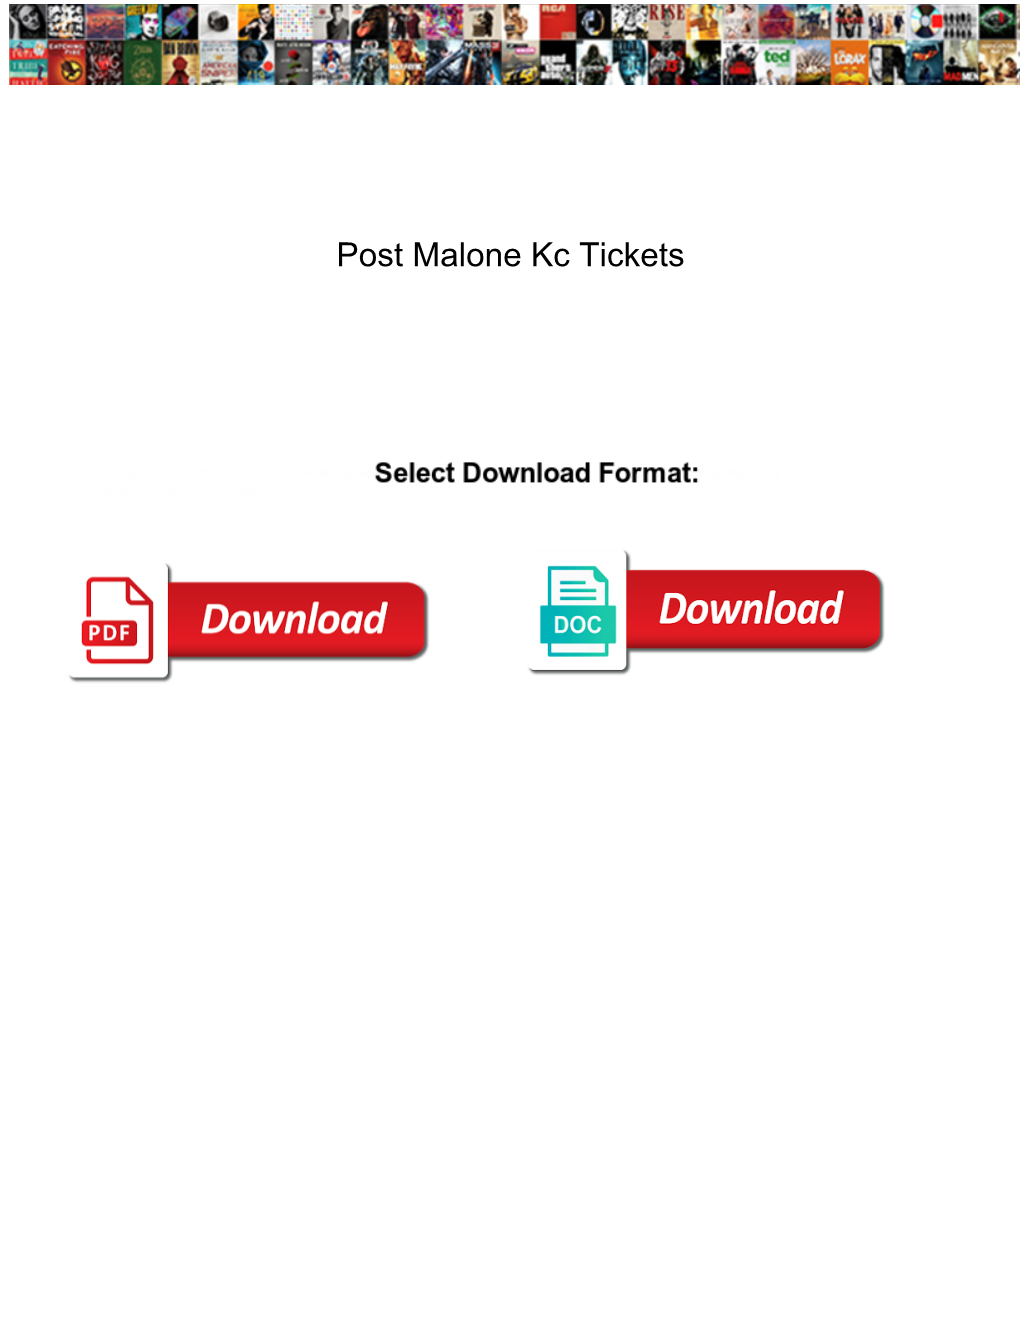 Post Malone Kc Tickets Concrete